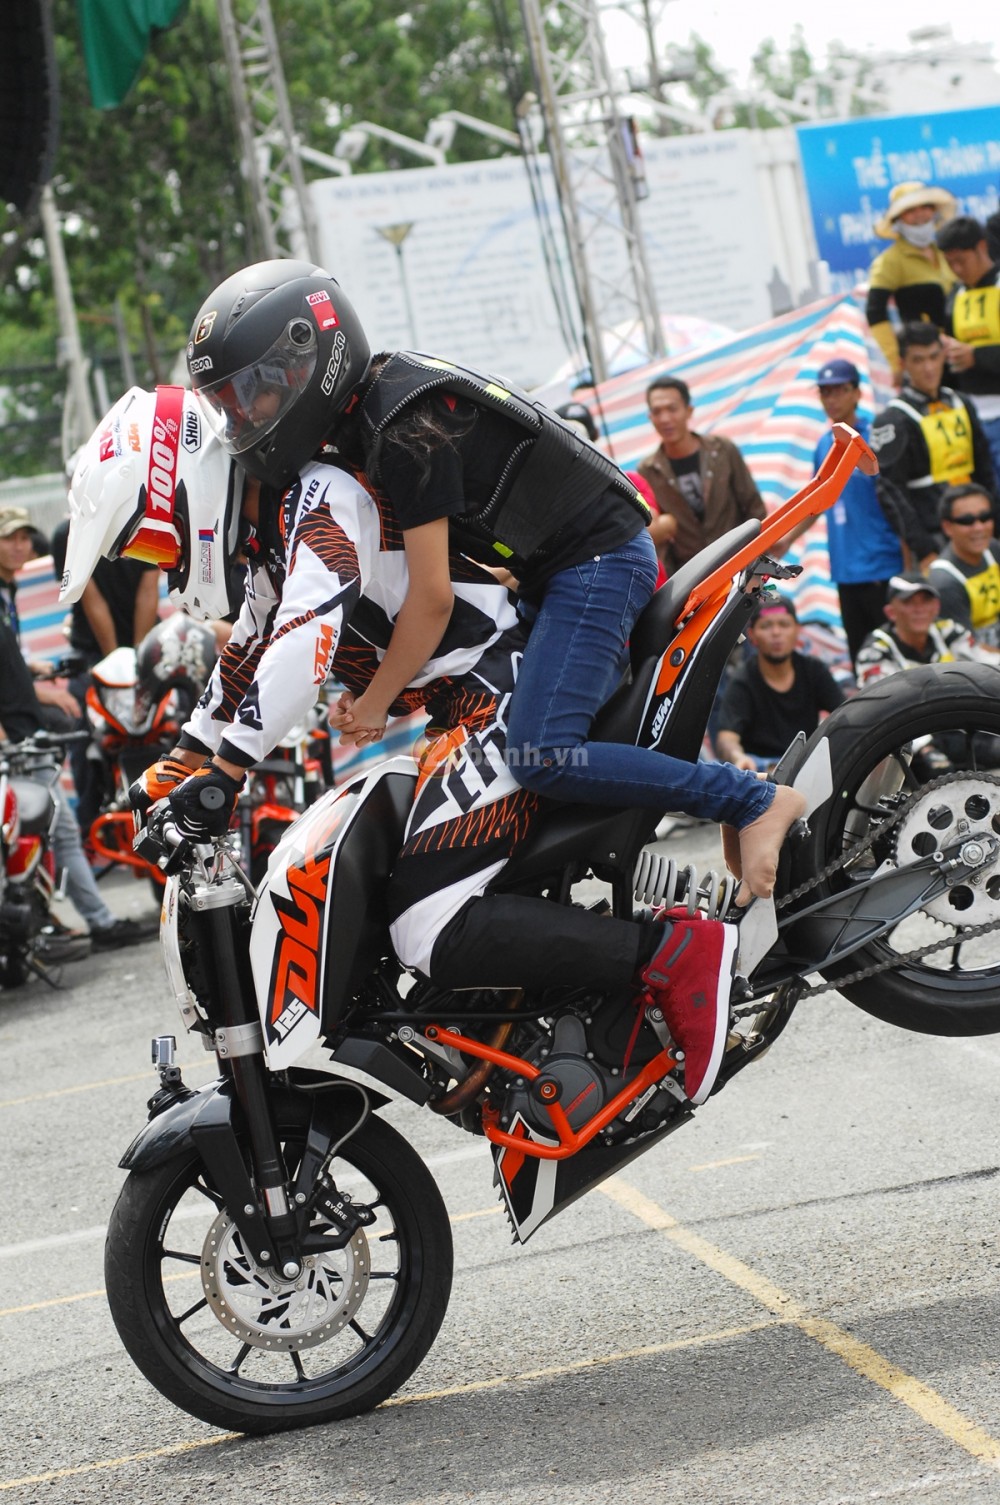 Xem man trinh dien thot tim tai Vietnam Motorbike Festival 2014 - 9